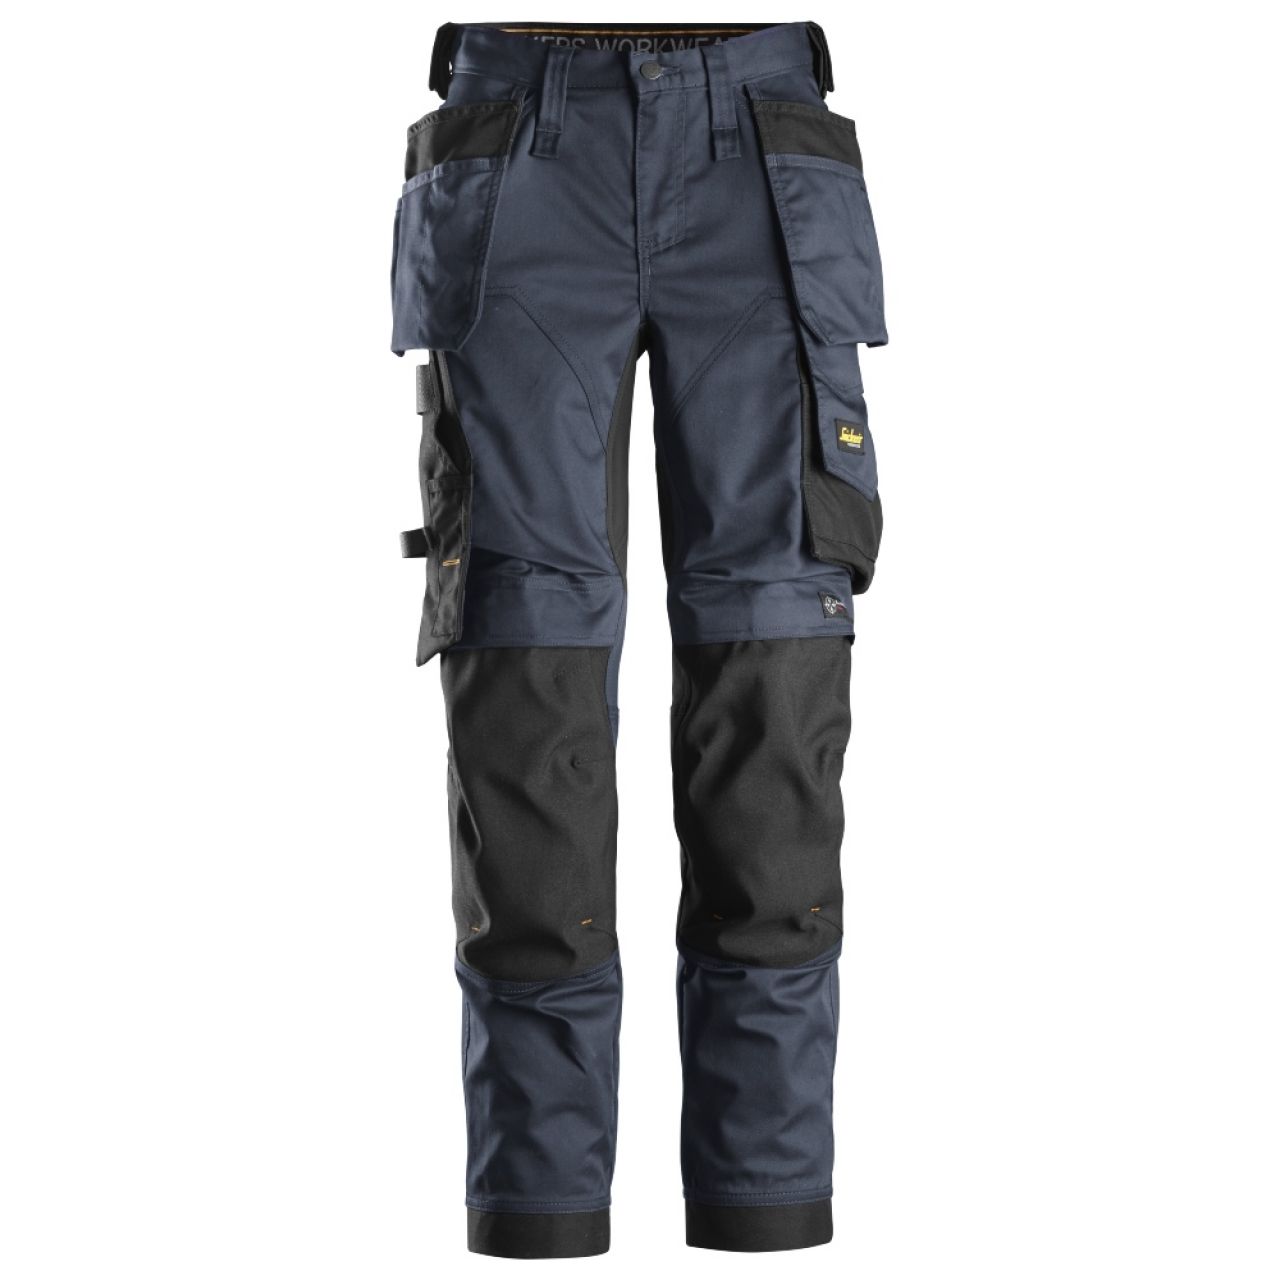 6247 Pantalones largos de trabajo elásticos para mujer con bolsillos flotantes AllroundWork azul marino-negro talla 19